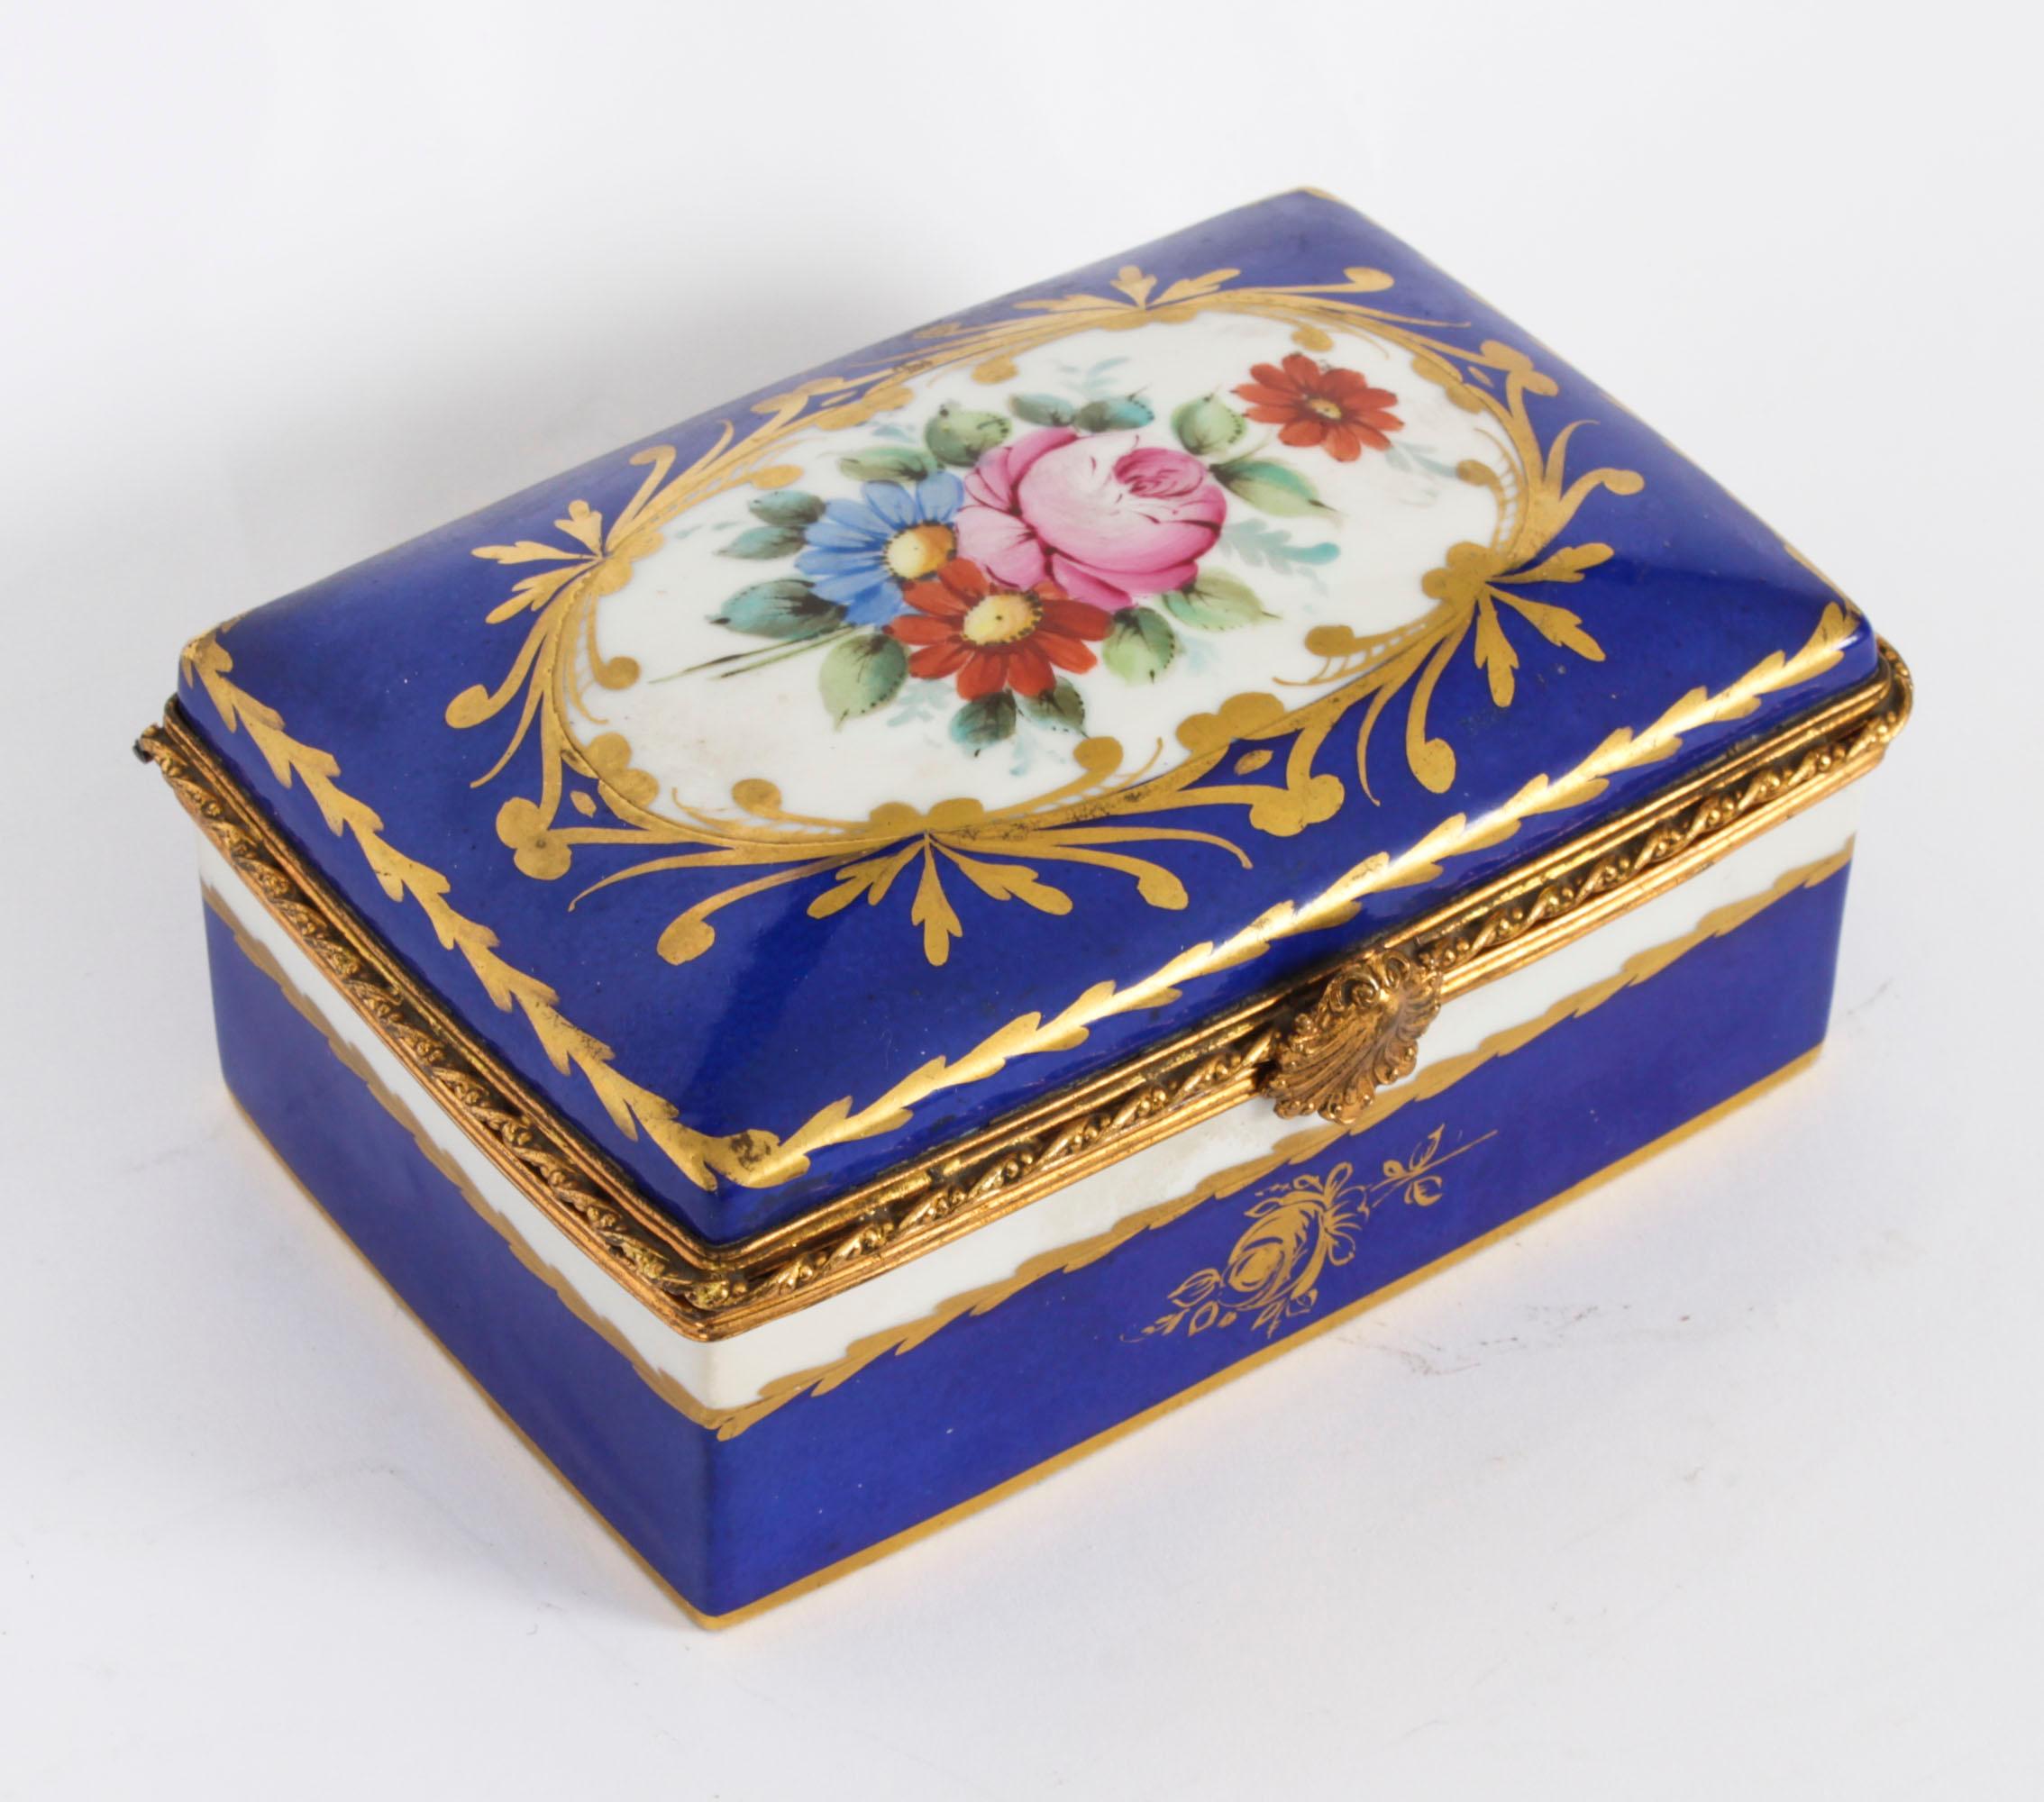 Antique Limoges Royal Blue Ormolu Mounted Casket Box 19h Century For Sale 11